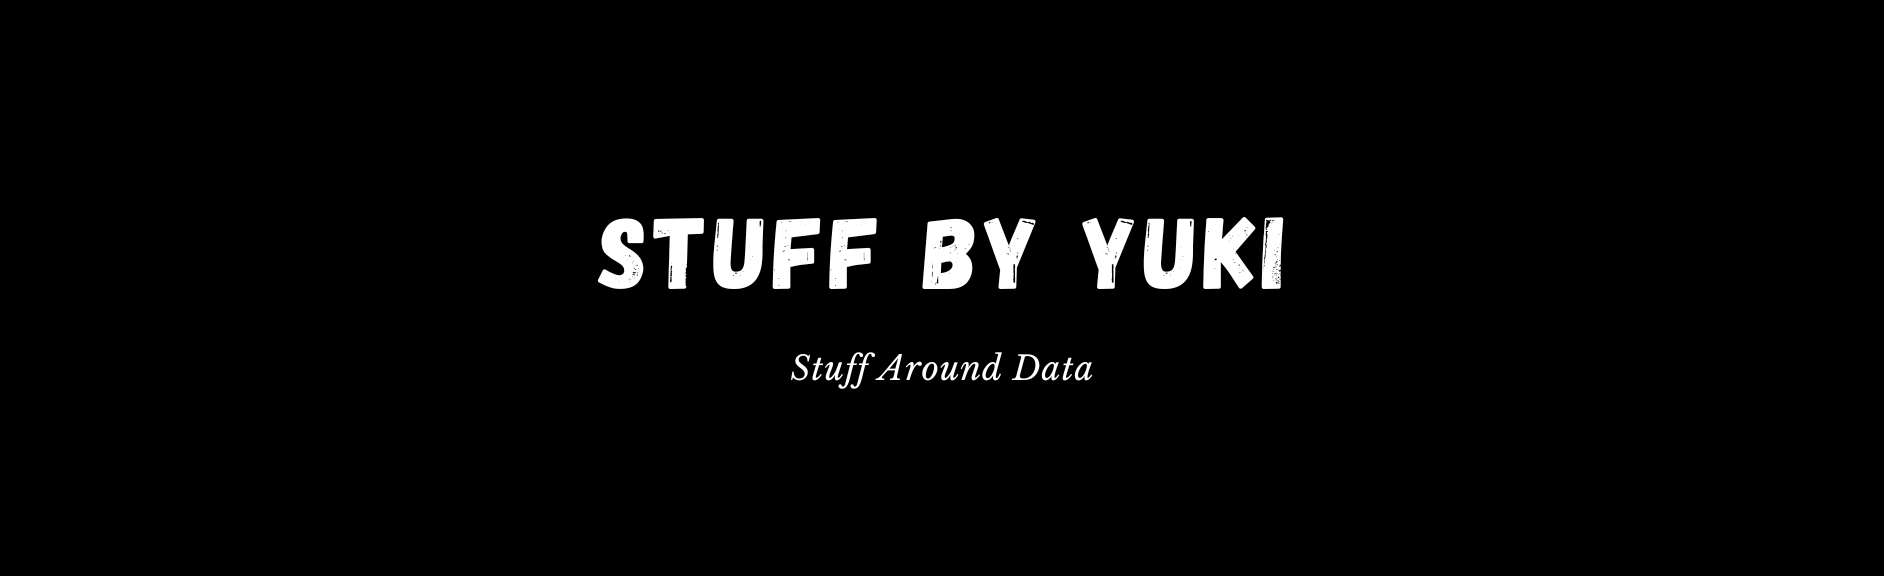 Stuff by Yuki